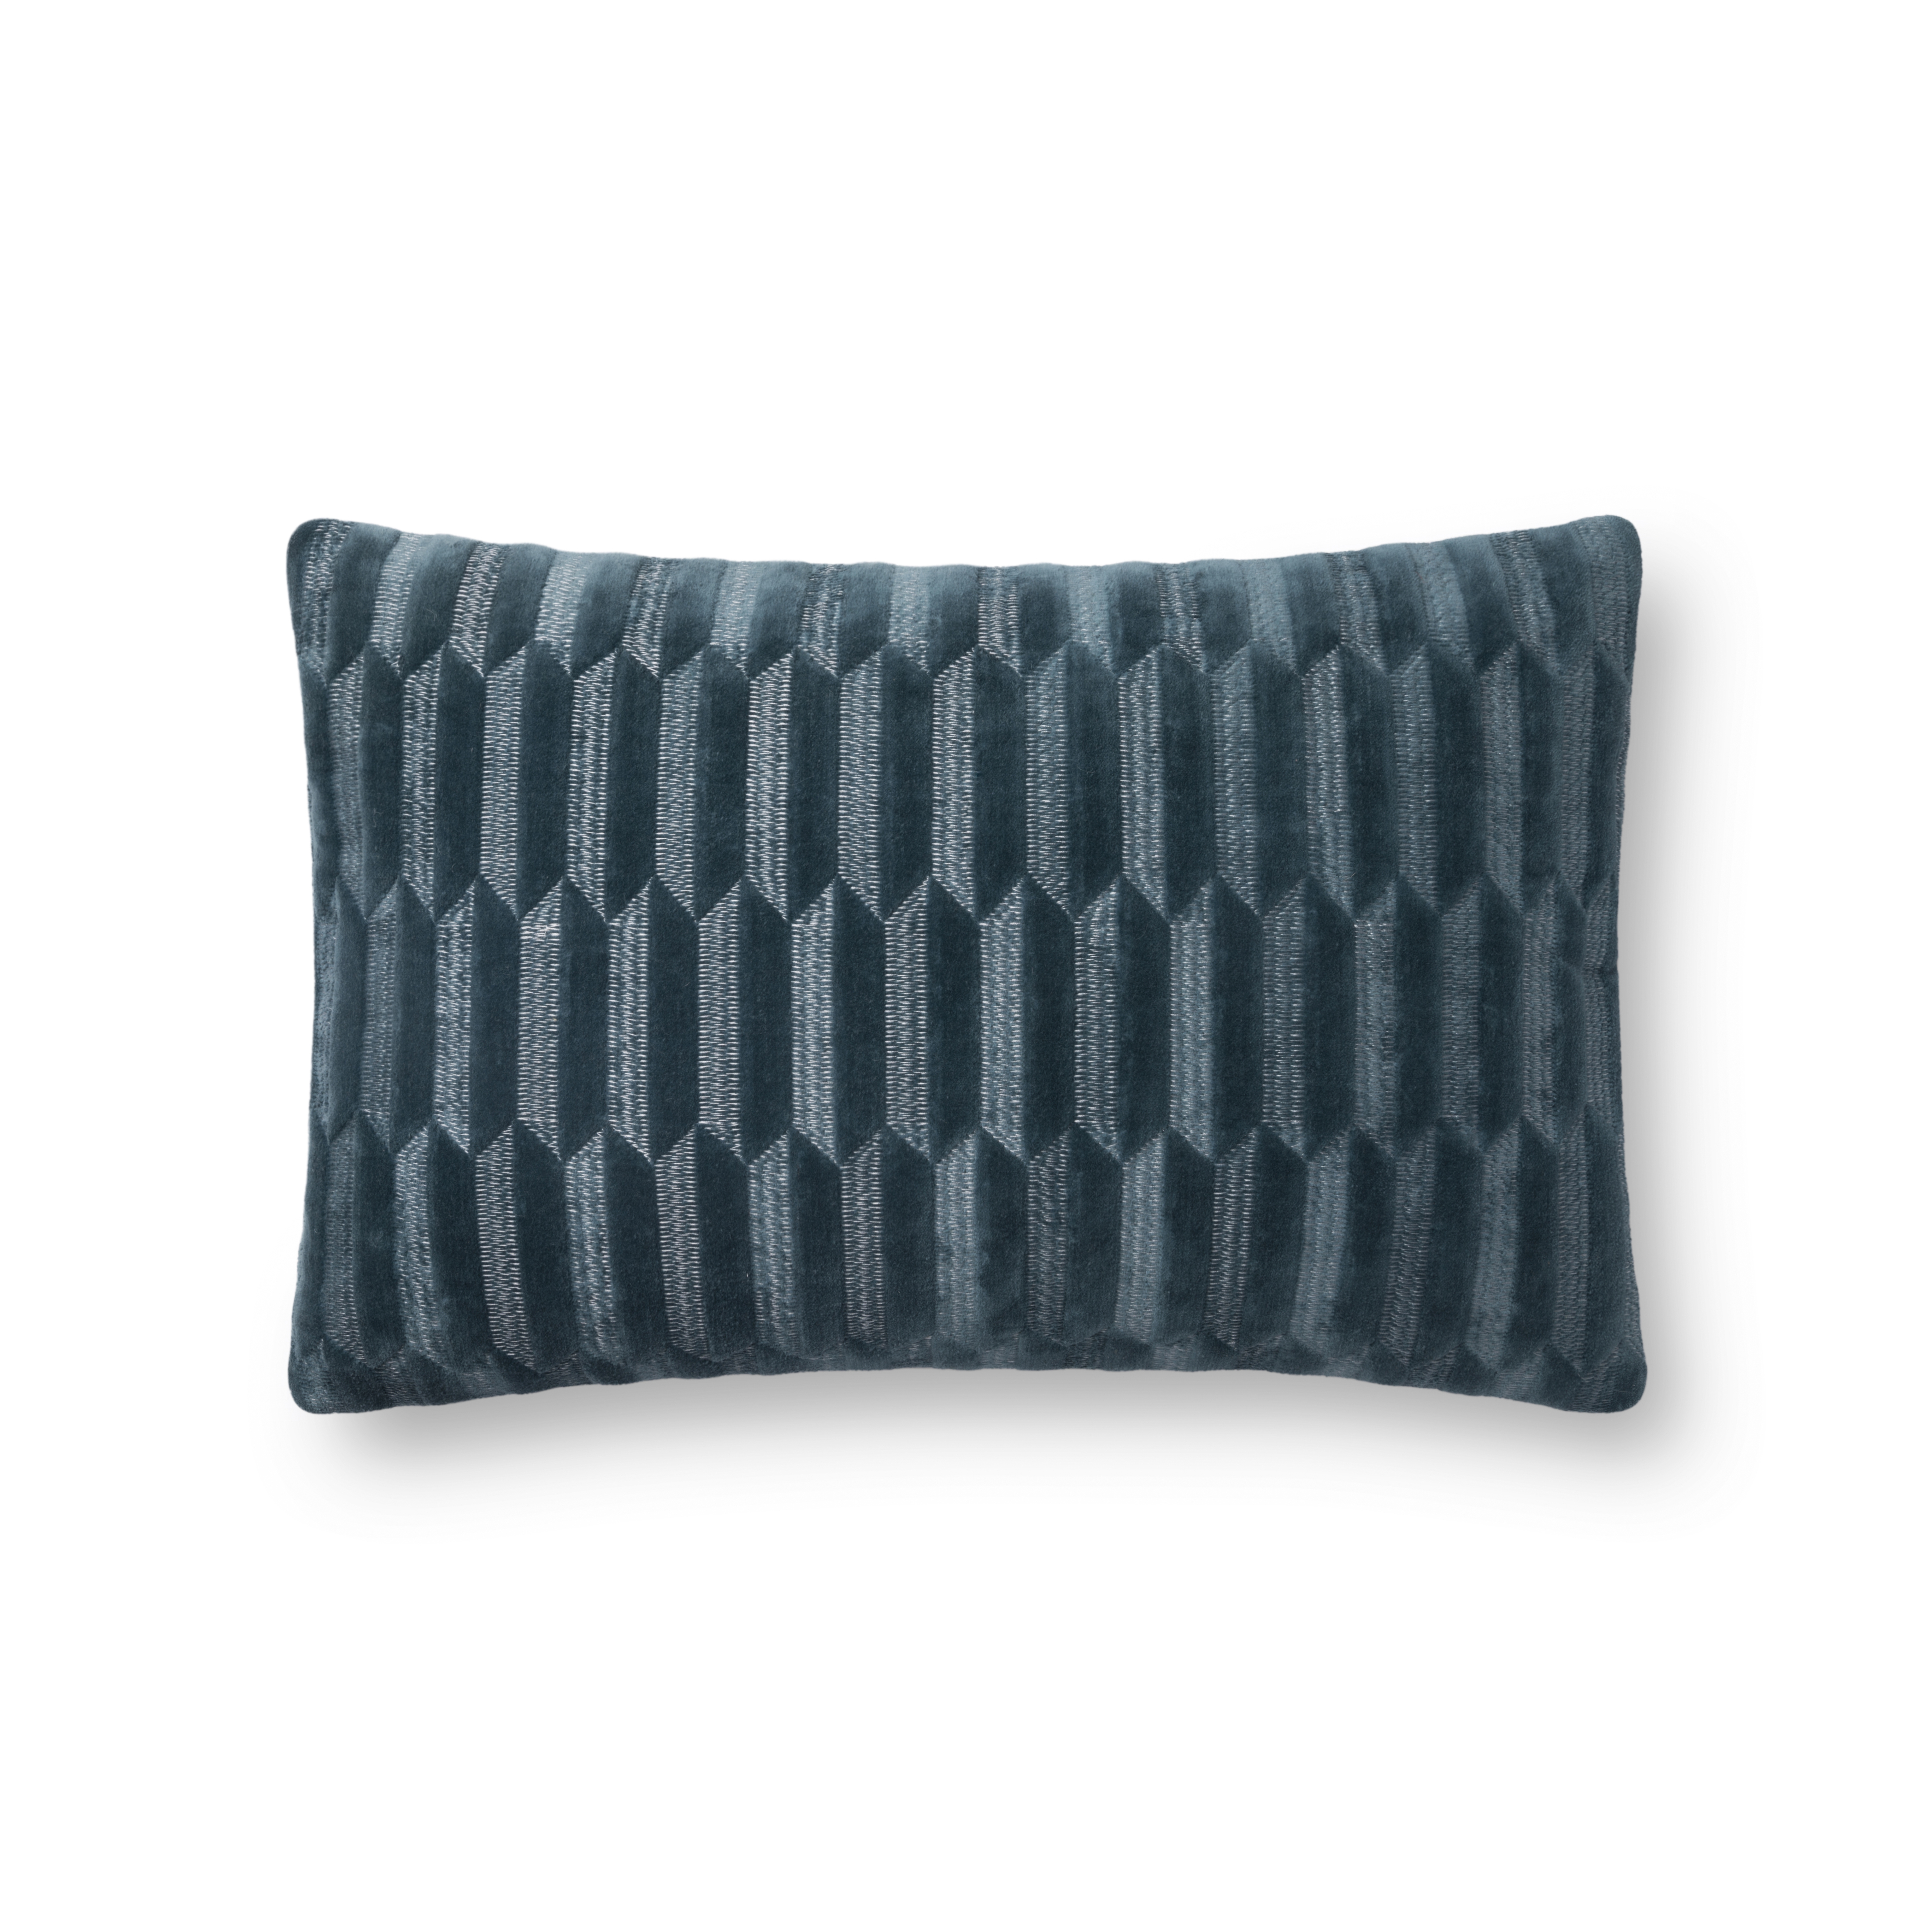 Geometric Lumbar Throw Pillow Cover, 21" x 13", Teal - Loloi Rugs